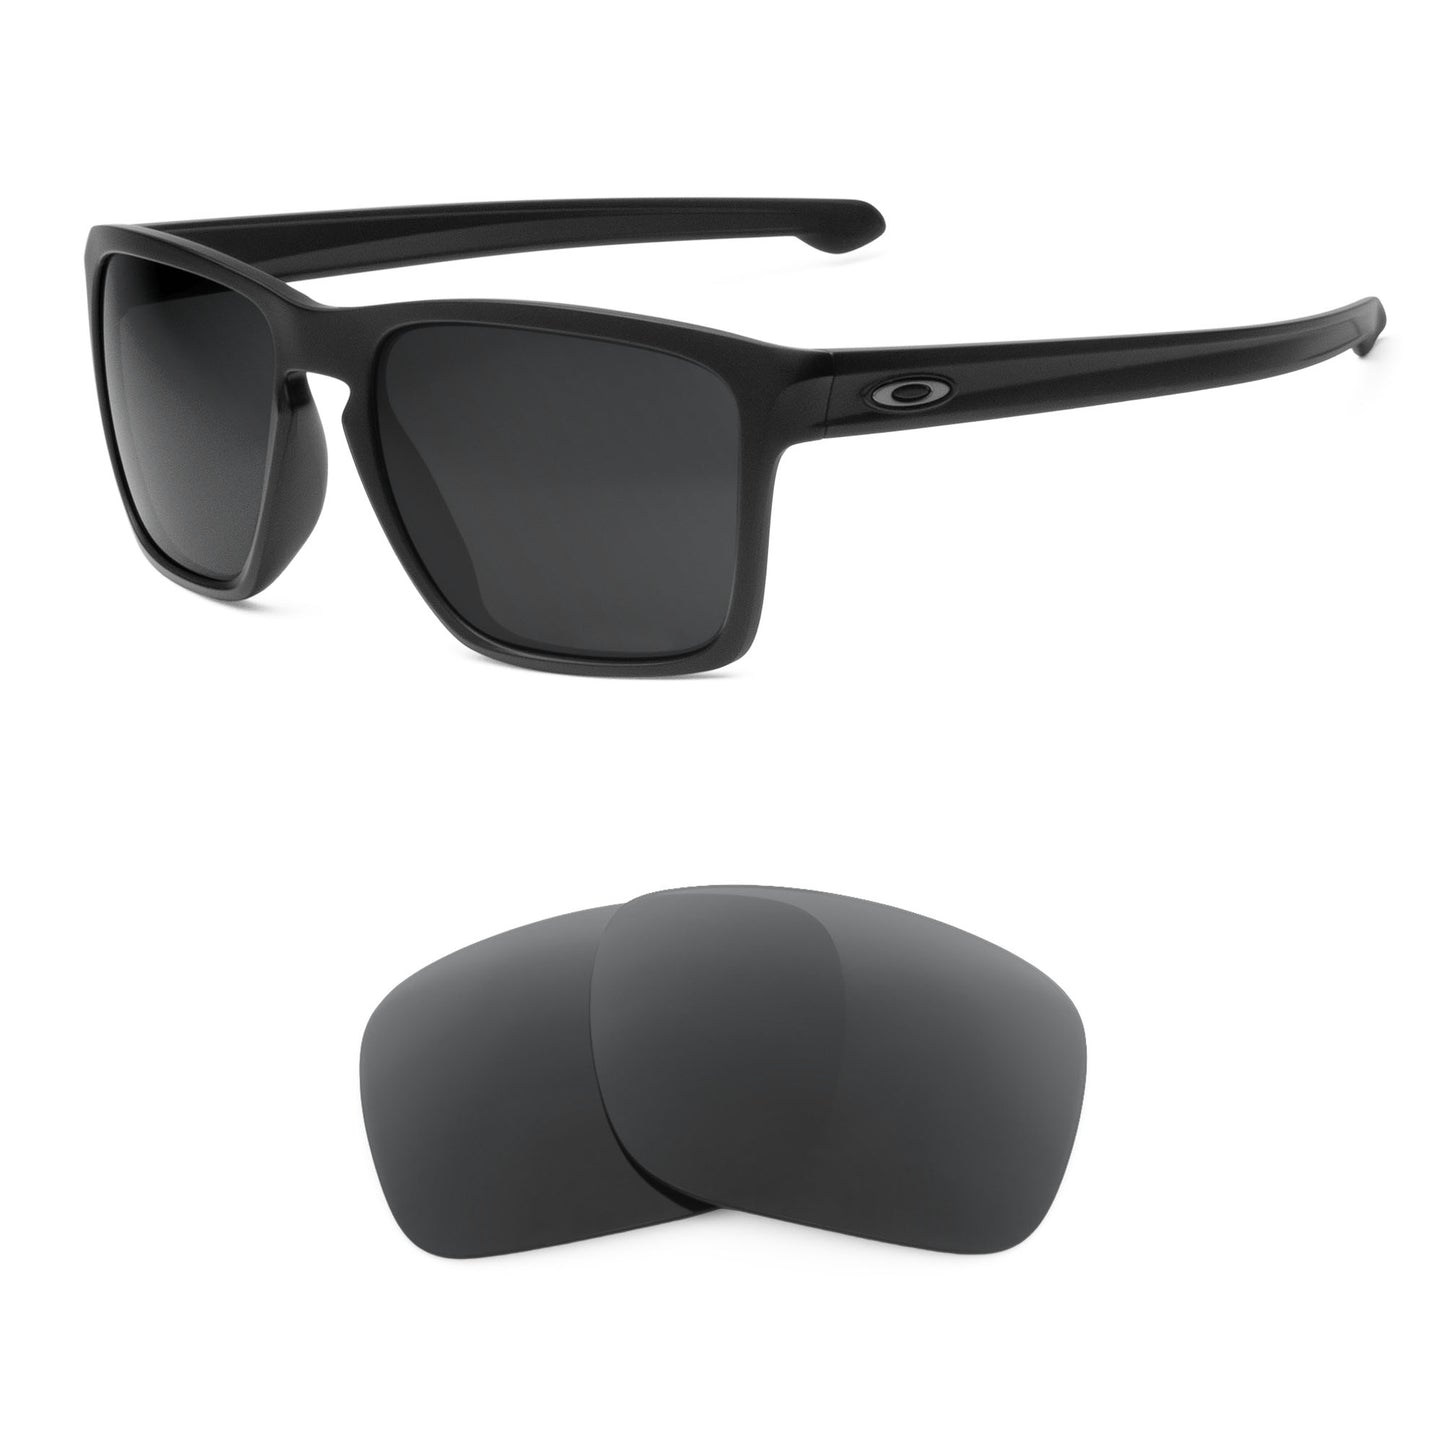 Oakley Sliver XL (Low Bridge Fit) sunglasses with replacement lenses